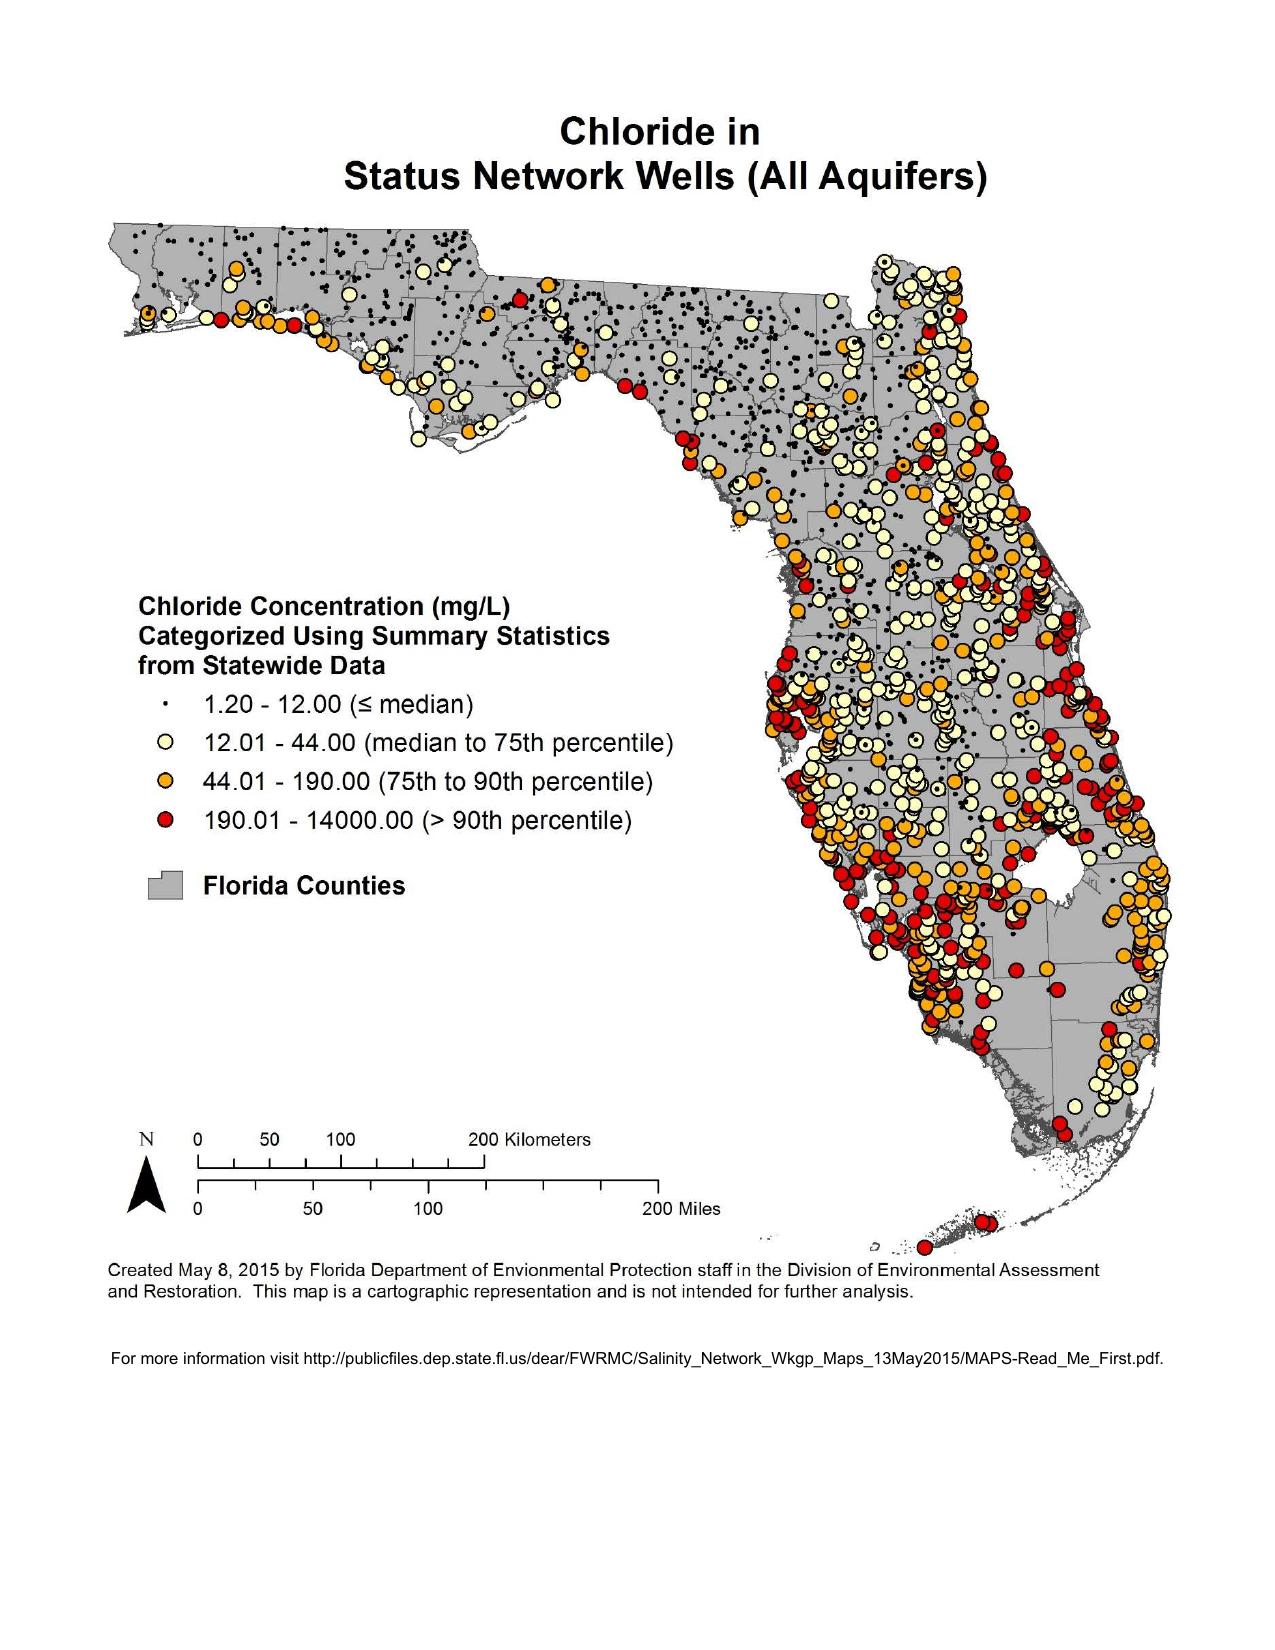 1275x1650 Chloride in Status Network Wells (All Aquifers), in Florida Well Salinity Study, by FL-DEP, 13 July 2015